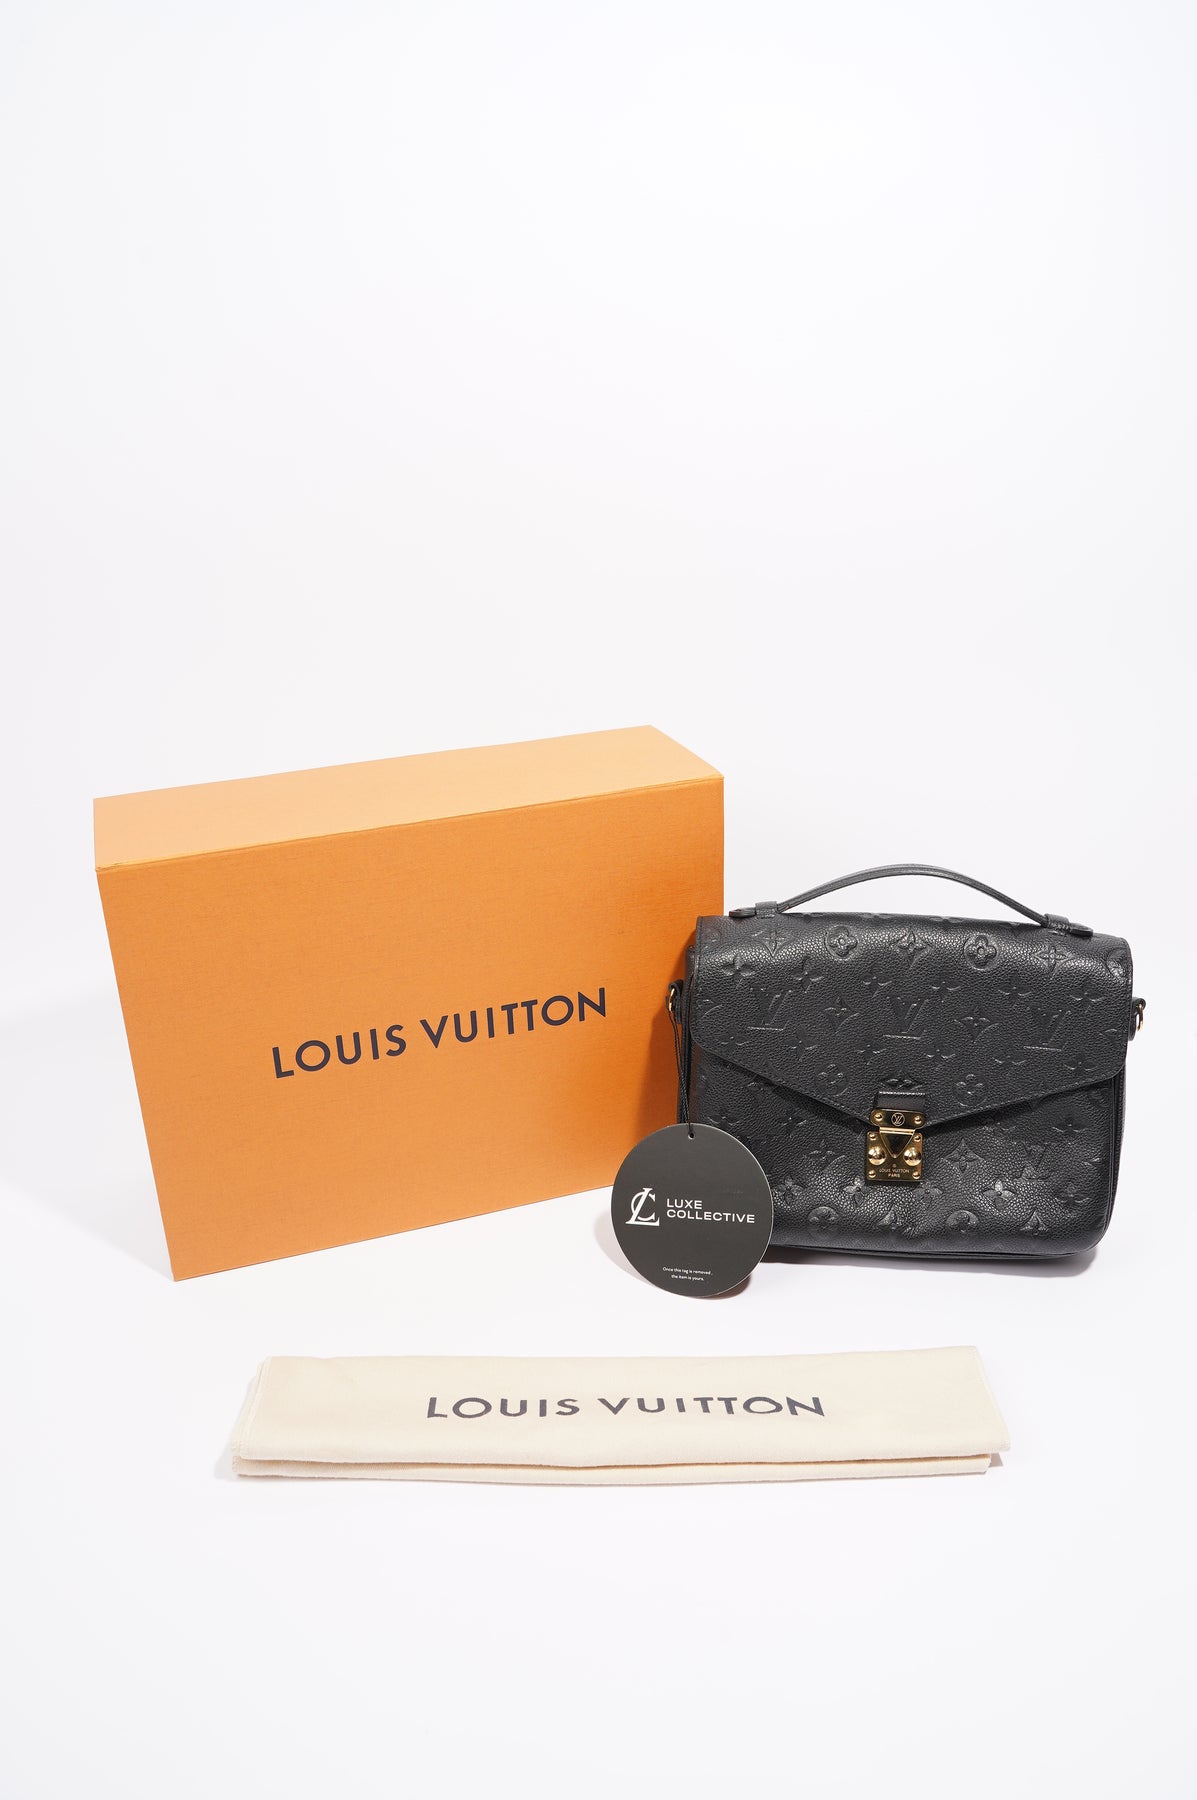 This bag speaks luxury. The Louis Cuitton Pochette Metis in black